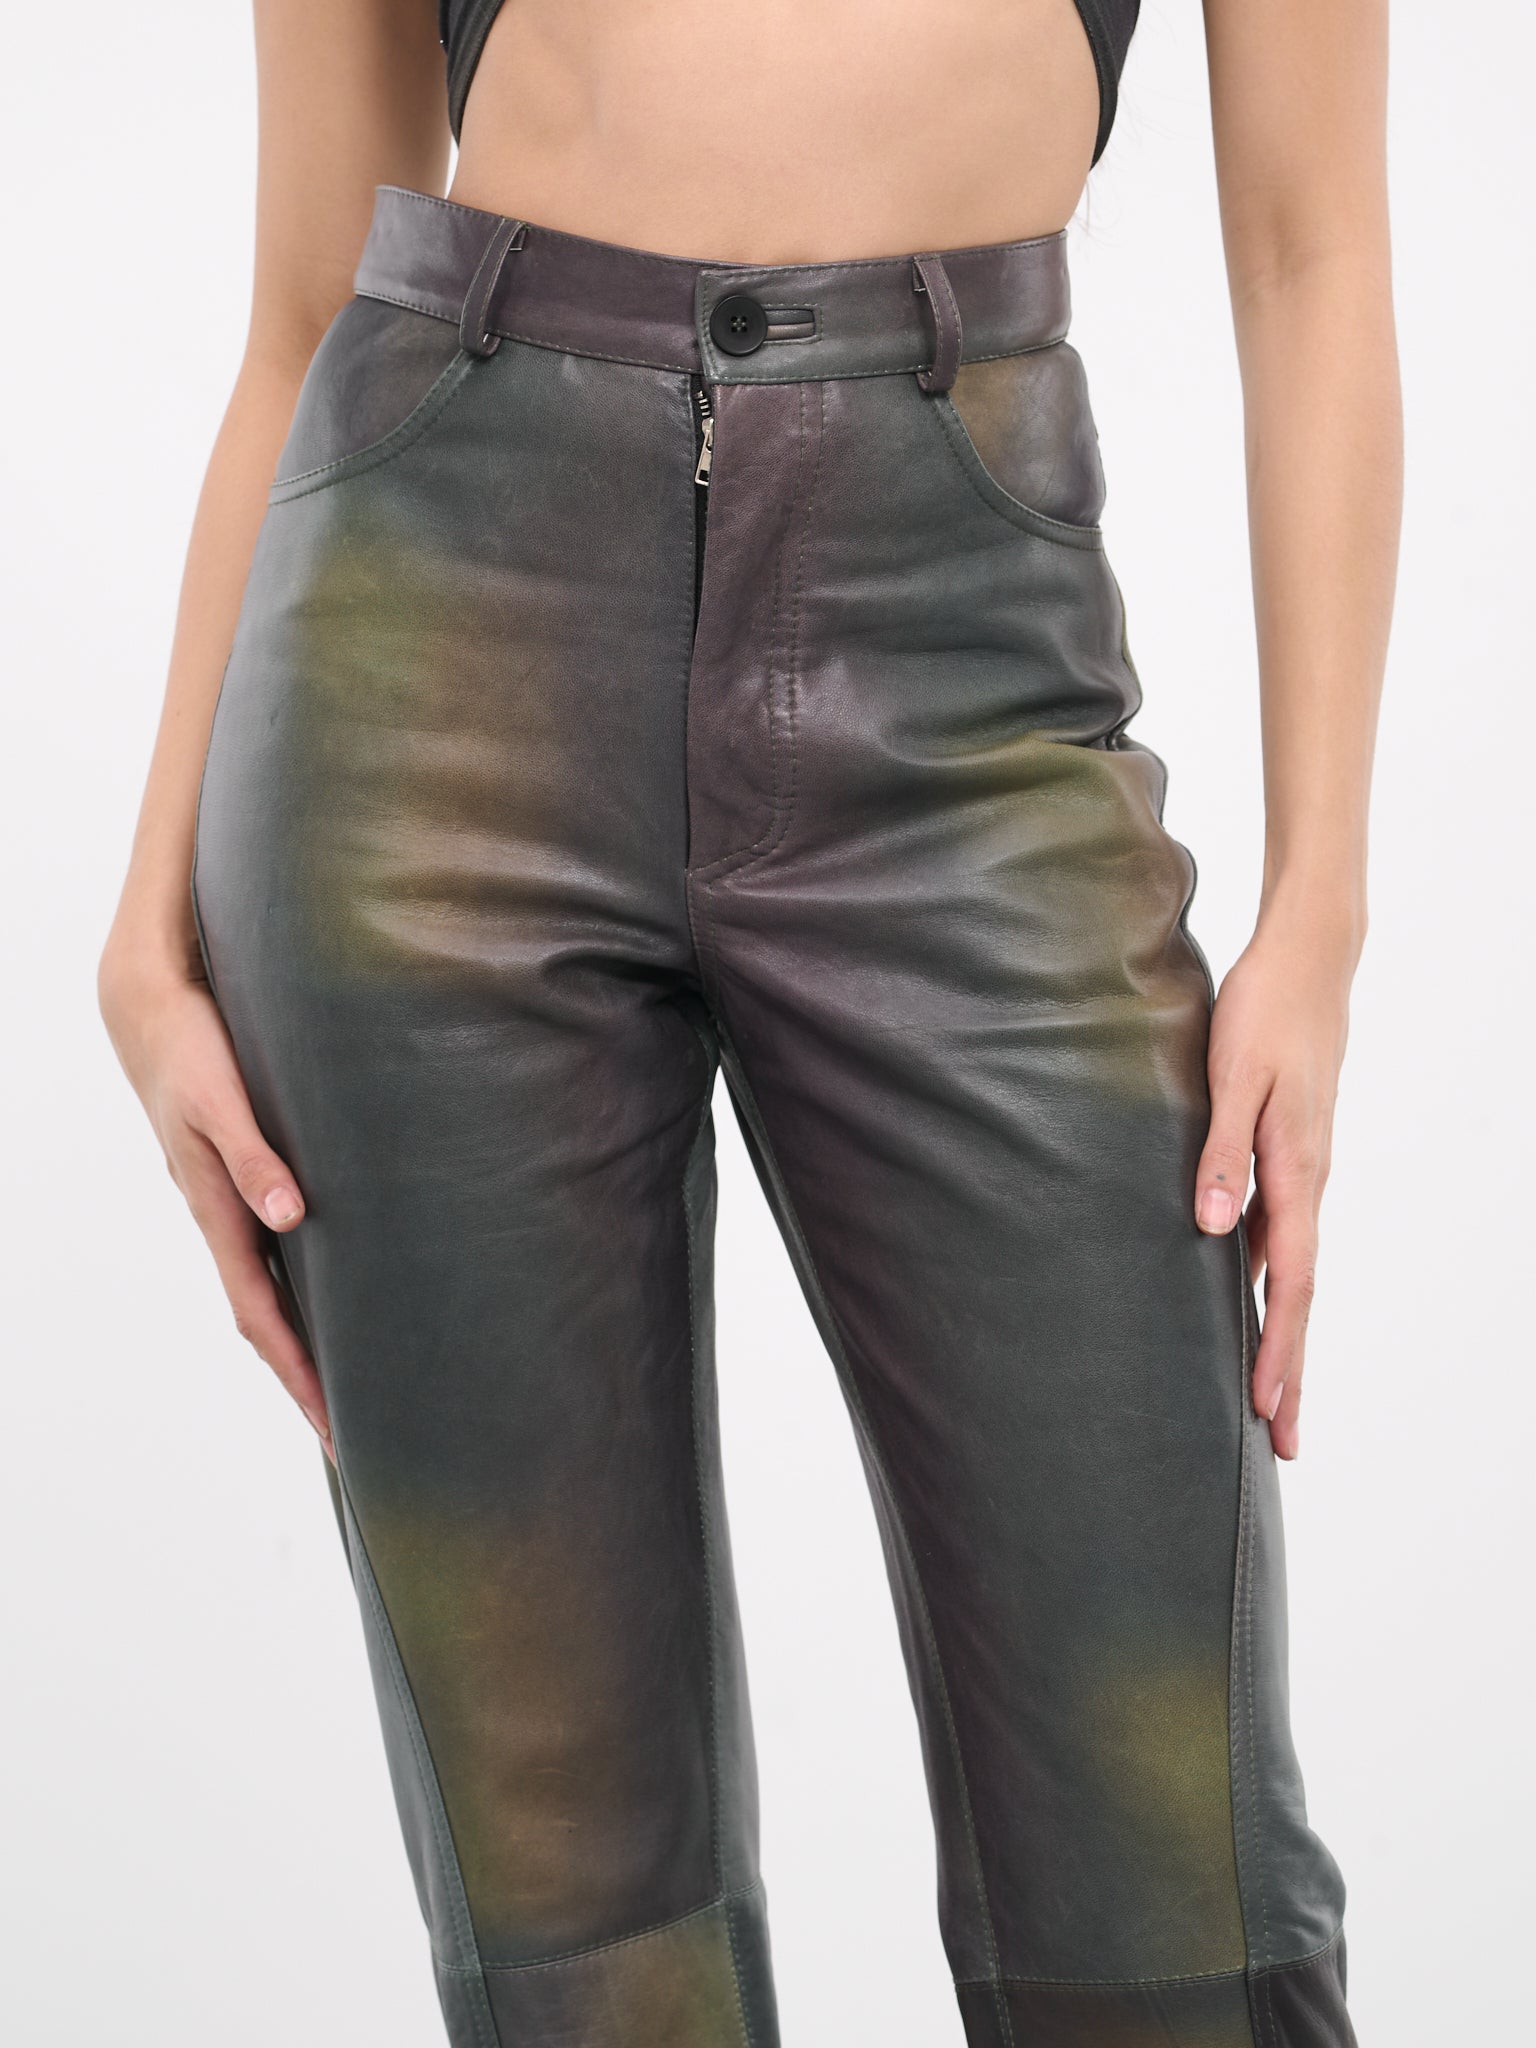 Printed Leather Pants (PANT-PRINT-03-PRINTED-DARK-GRE)